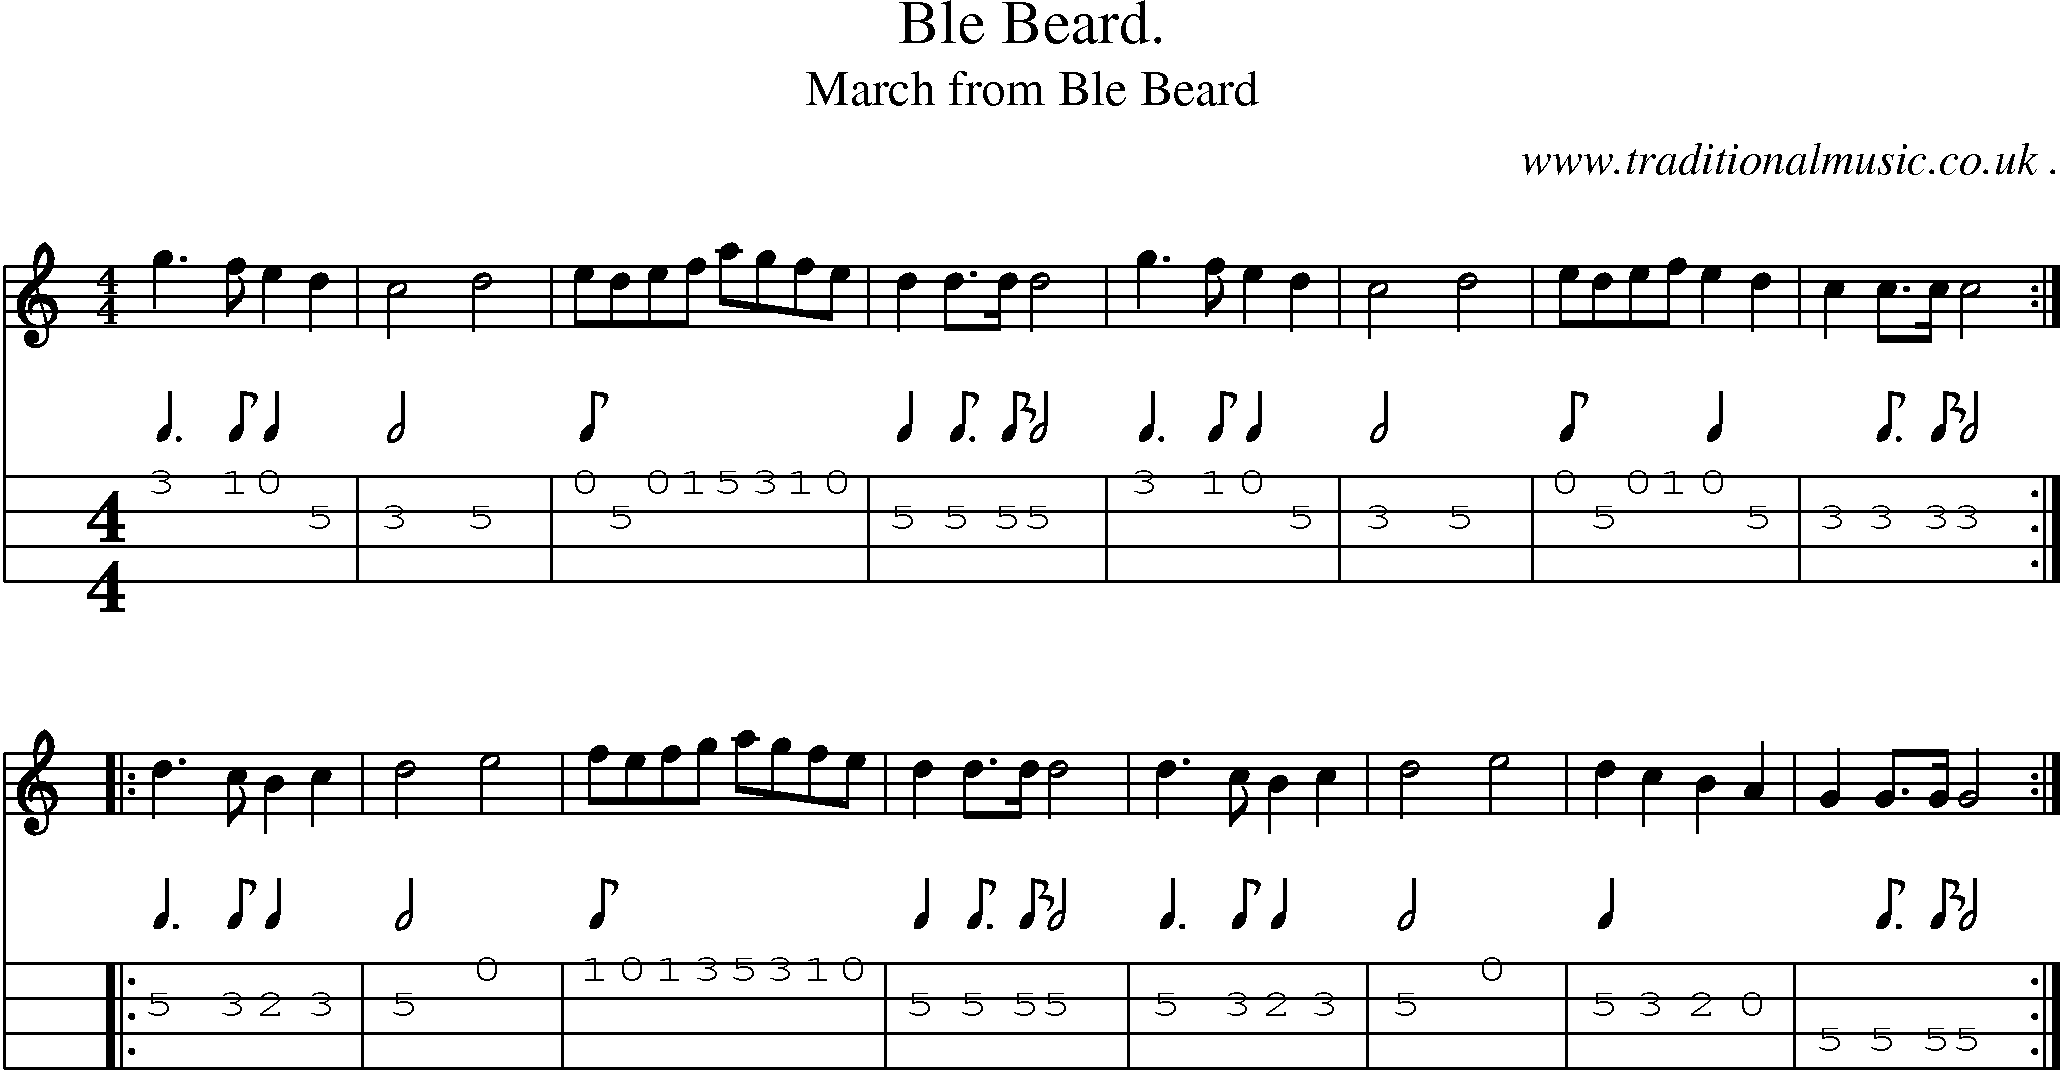 Sheet-Music and Mandolin Tabs for Ble Beard